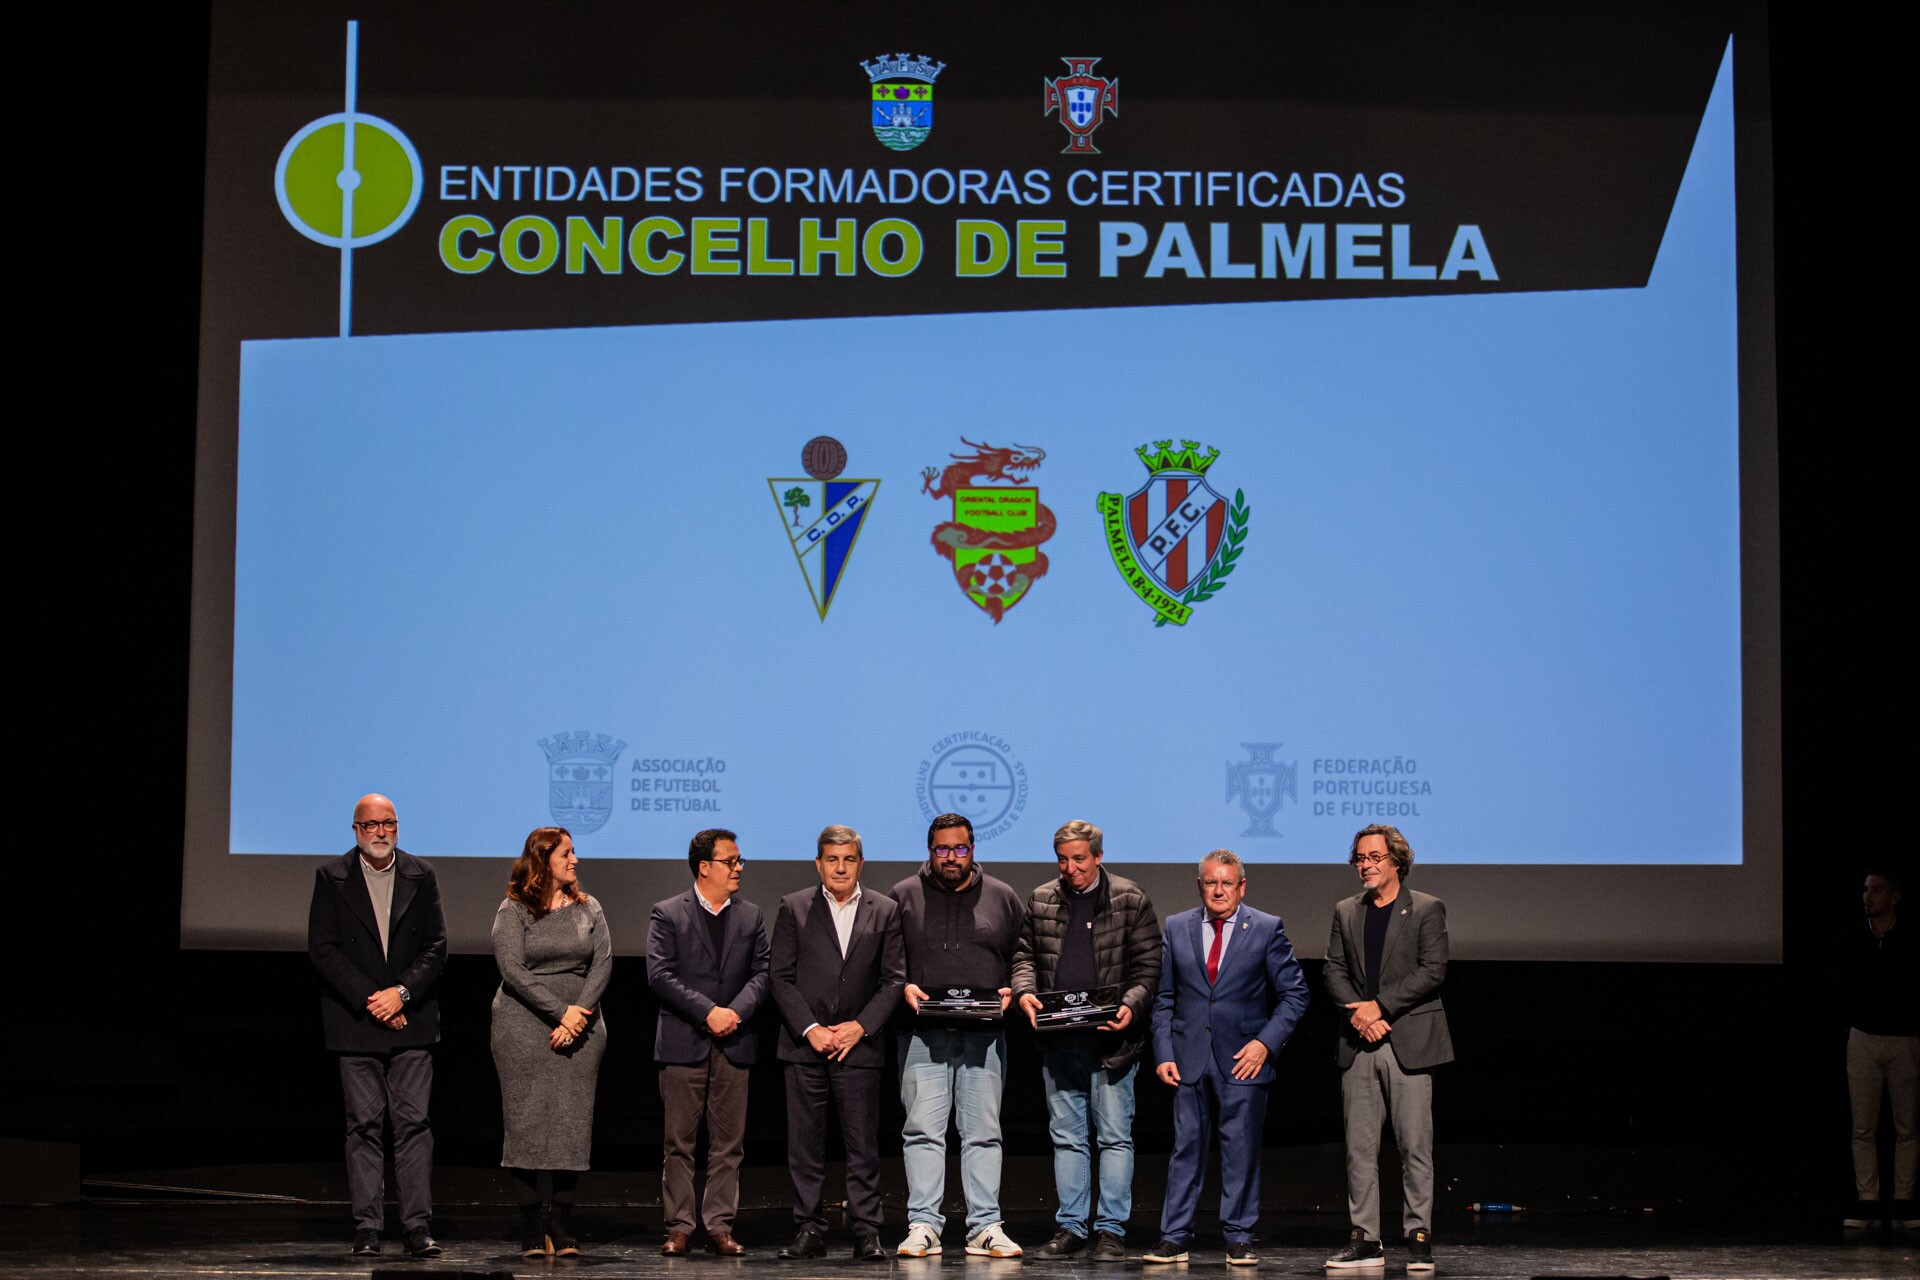 Futebol/Futsal: Cine-Teatro S. João acolheu Cerimónia de Entrega de Diplomas